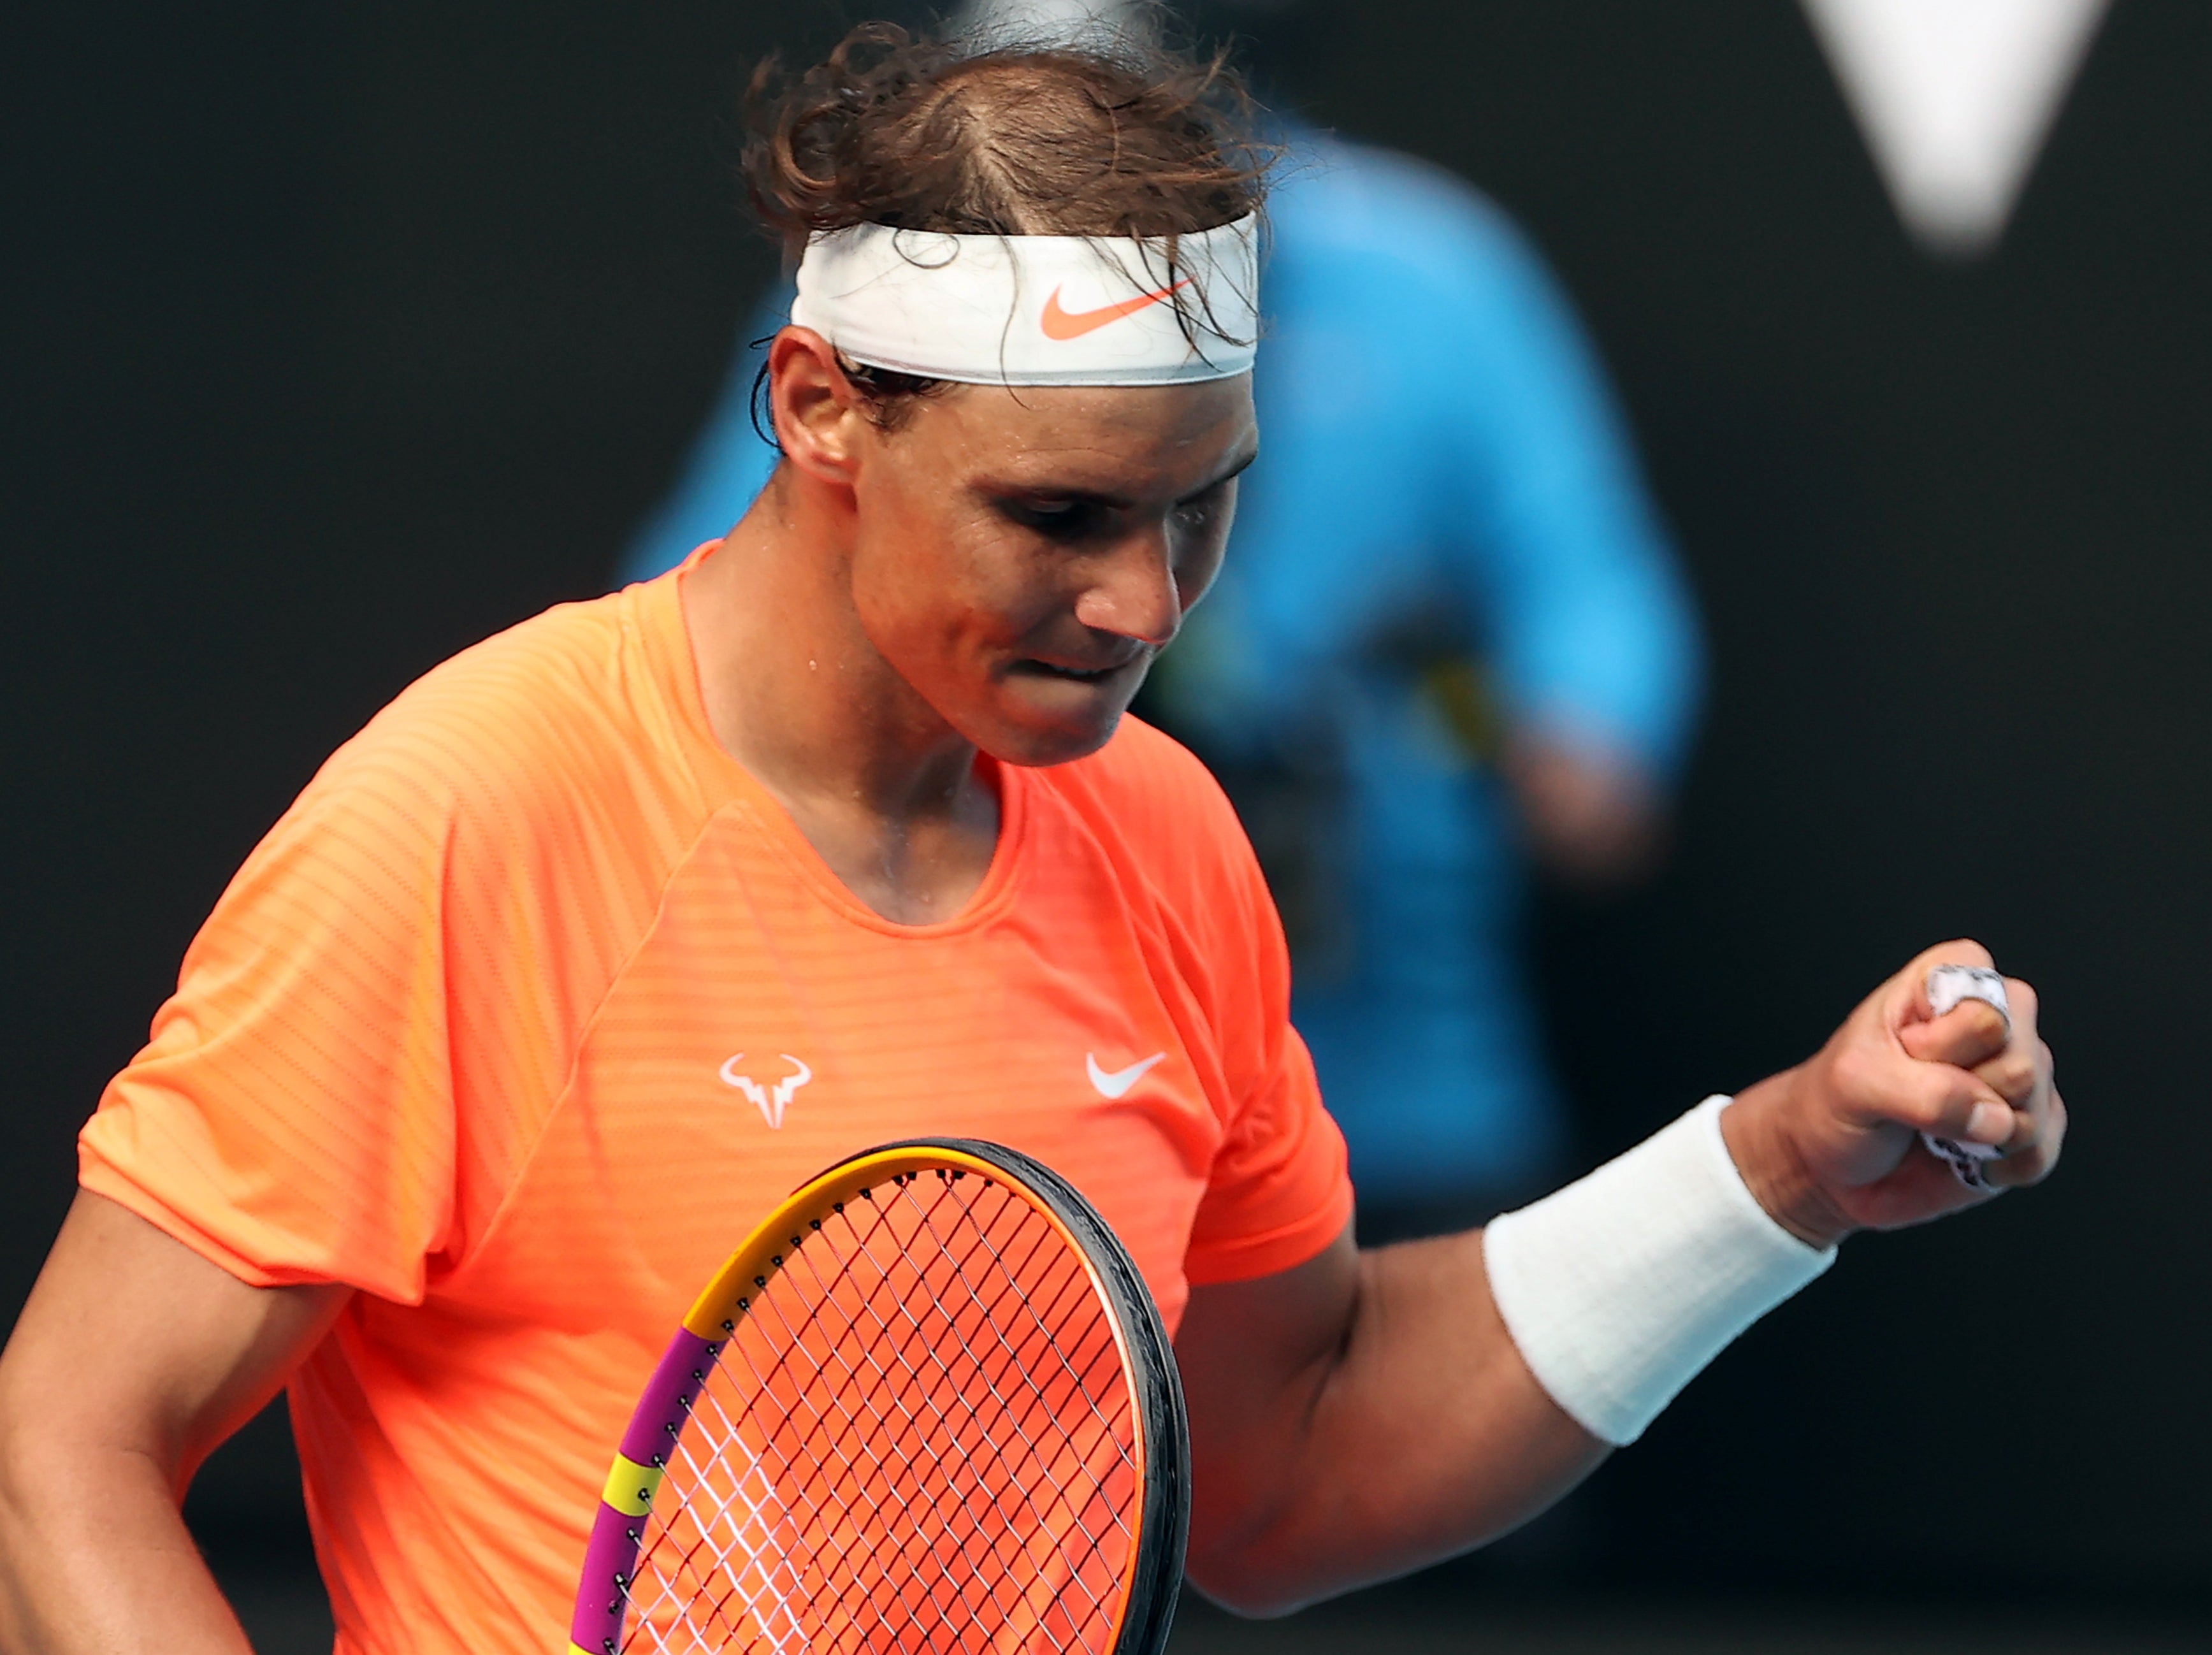 Former Australian Open champion Rafael Nadal beat Fabio Fognini in straight sets